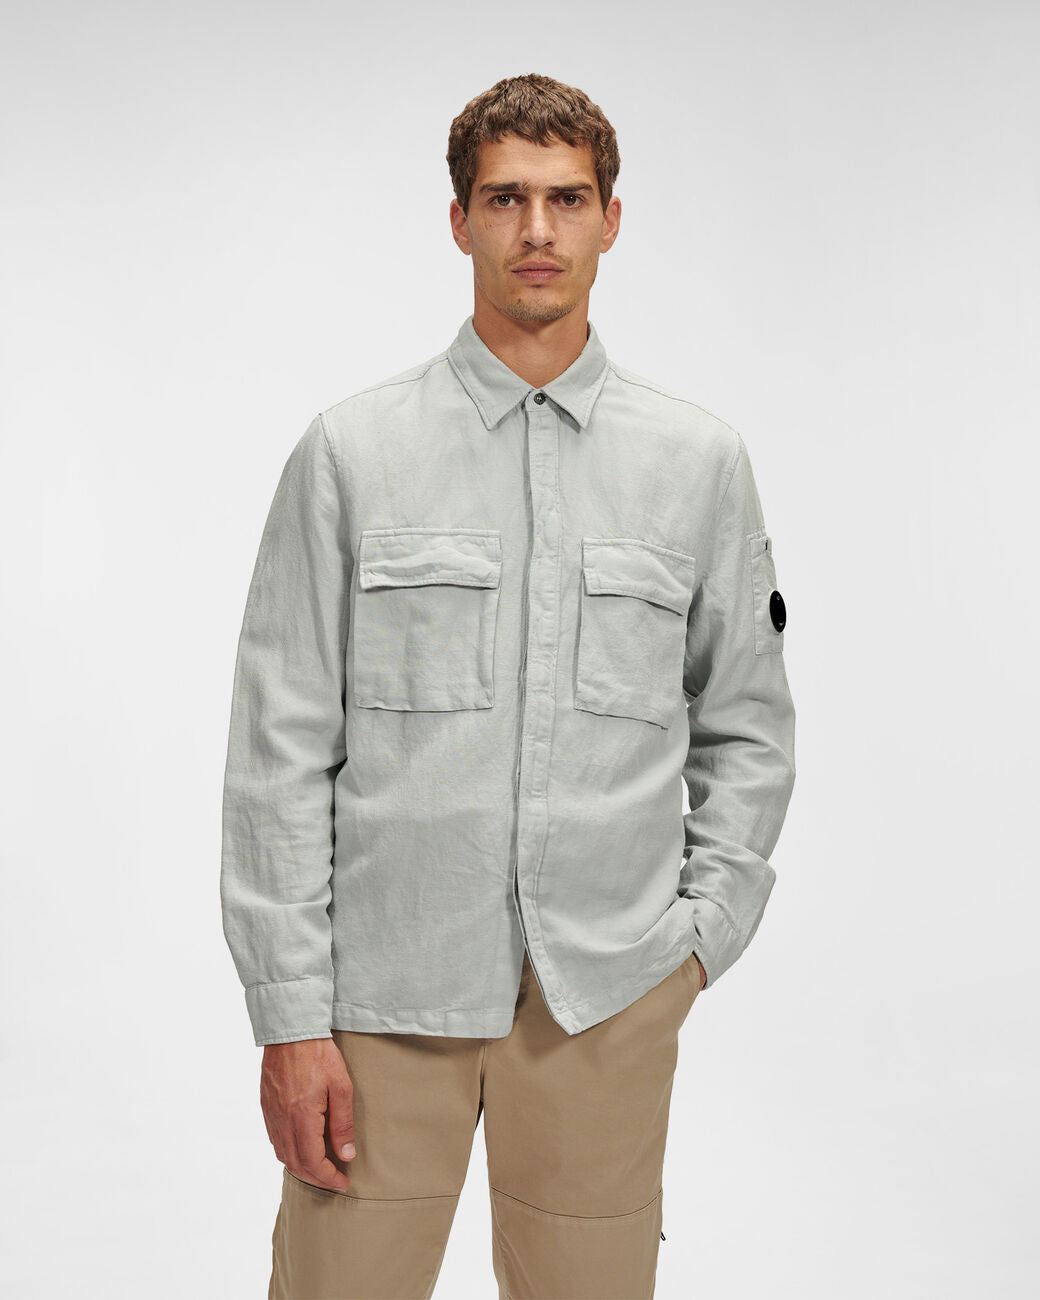 C.P. COMPANY snap zipper shirt in Mist